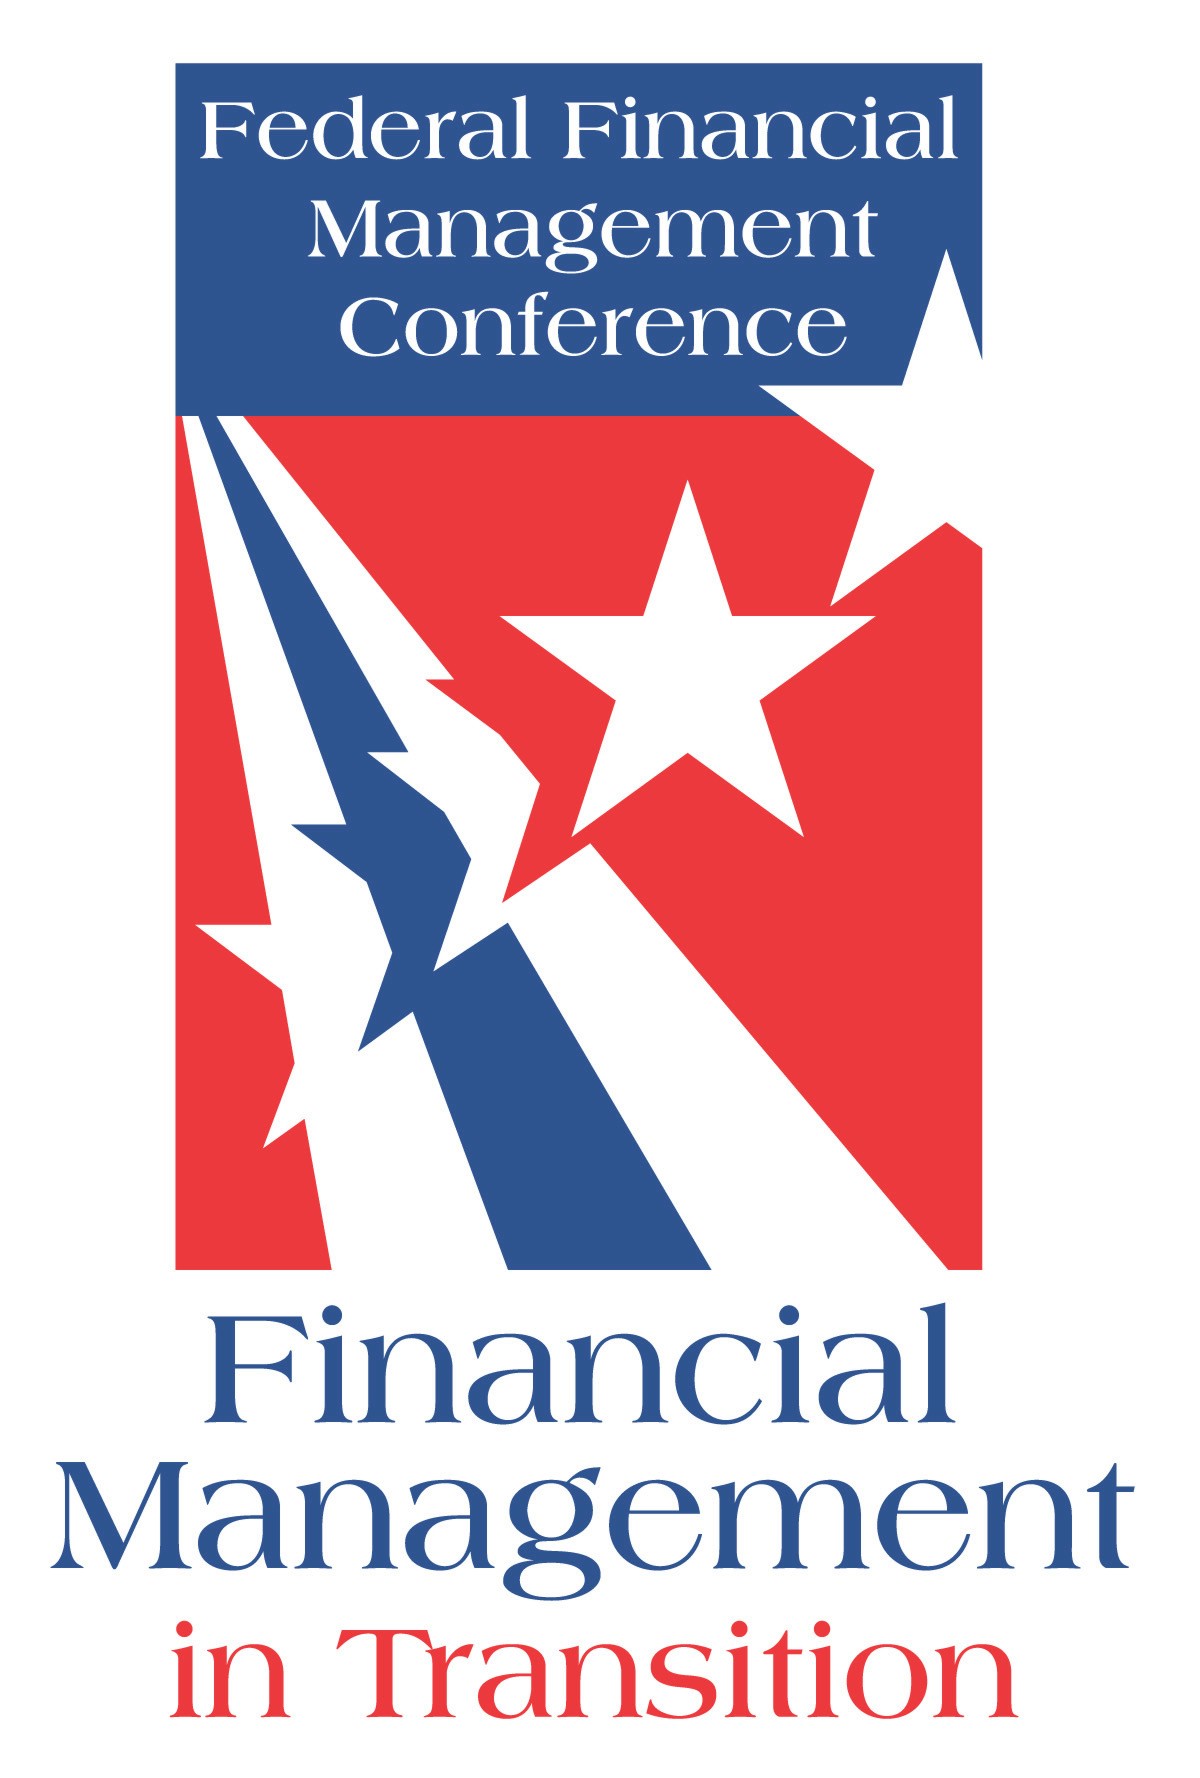 FFMC Conference Logo